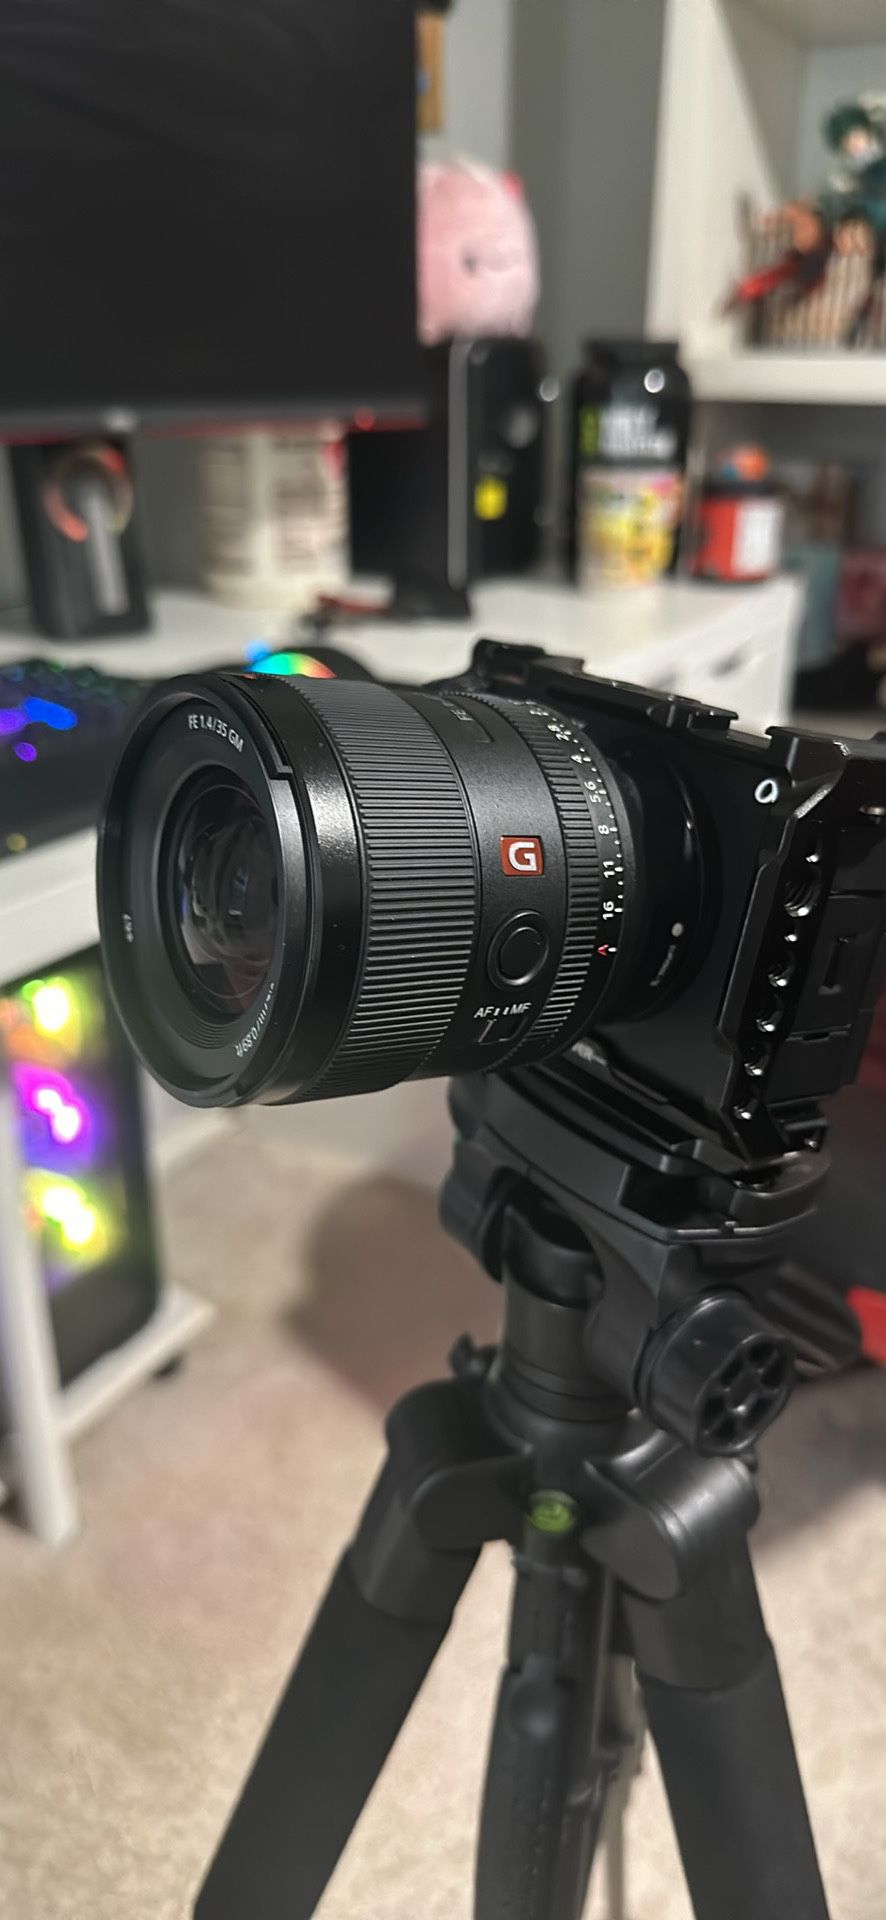 Sony 35mm f1.4 GM Lens